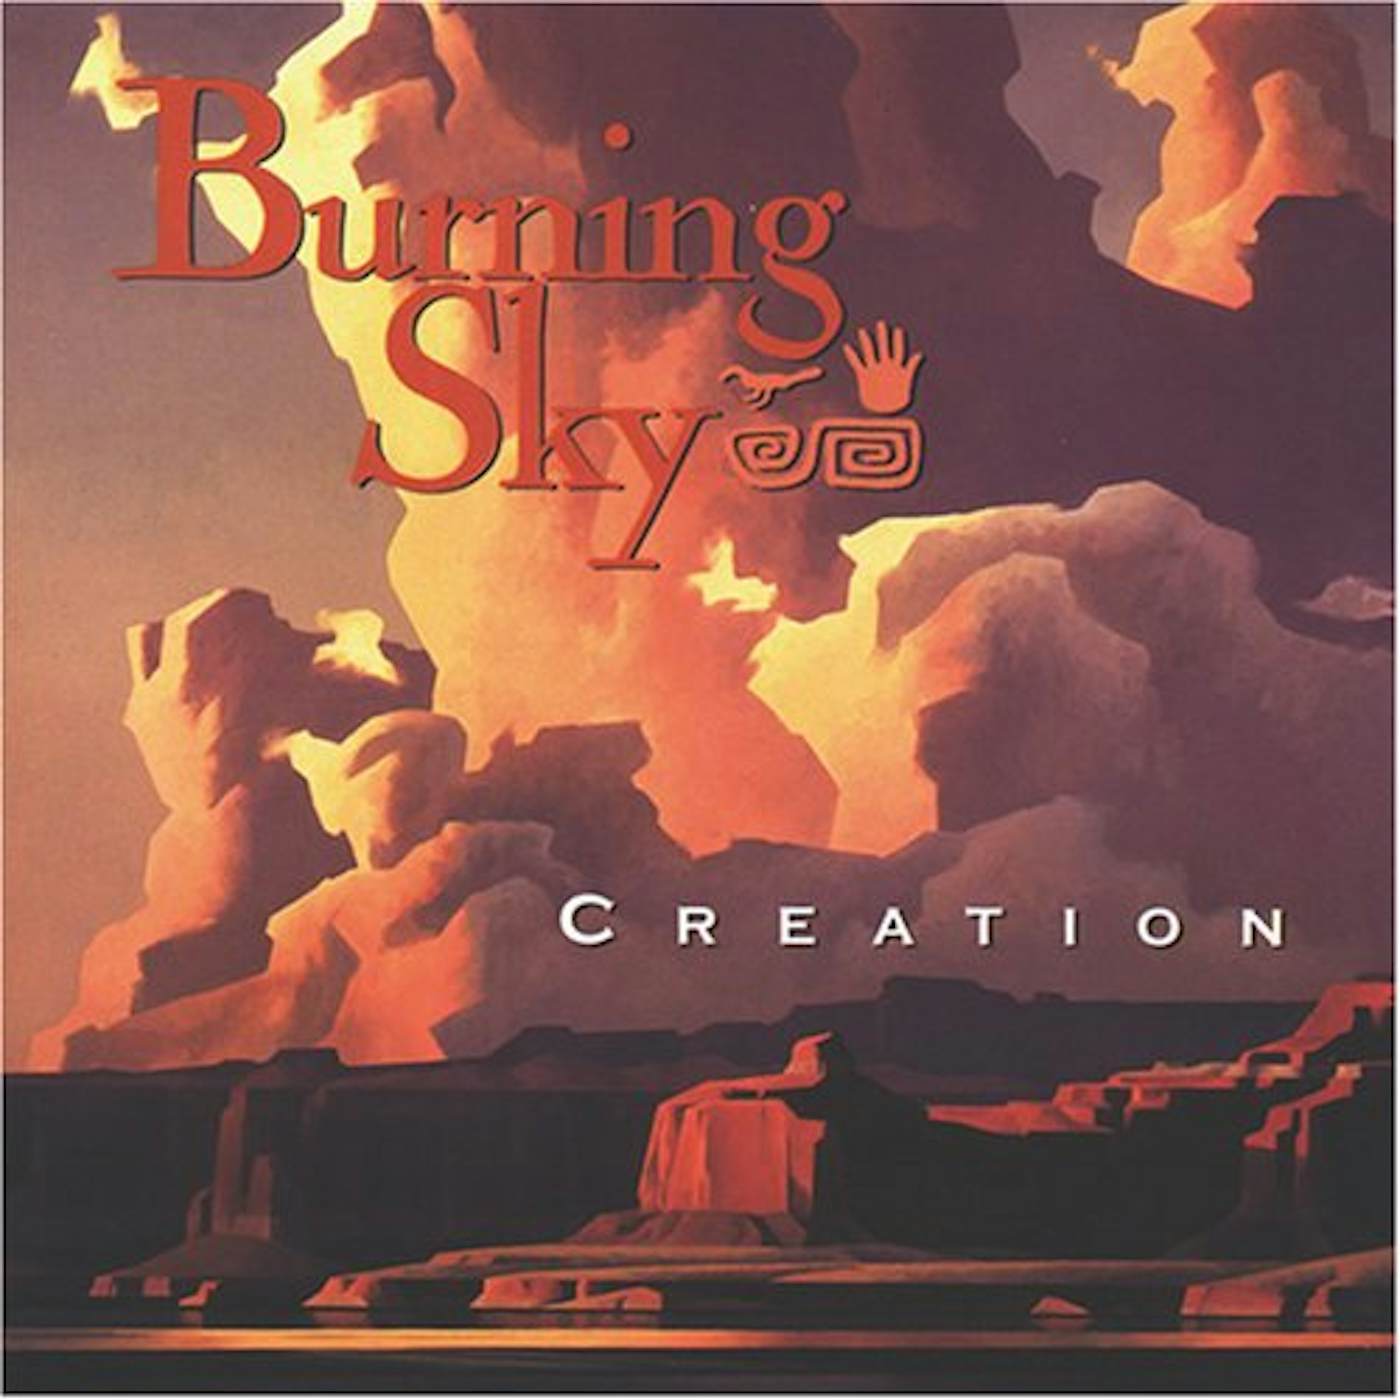 Burning Sky CREATION CD